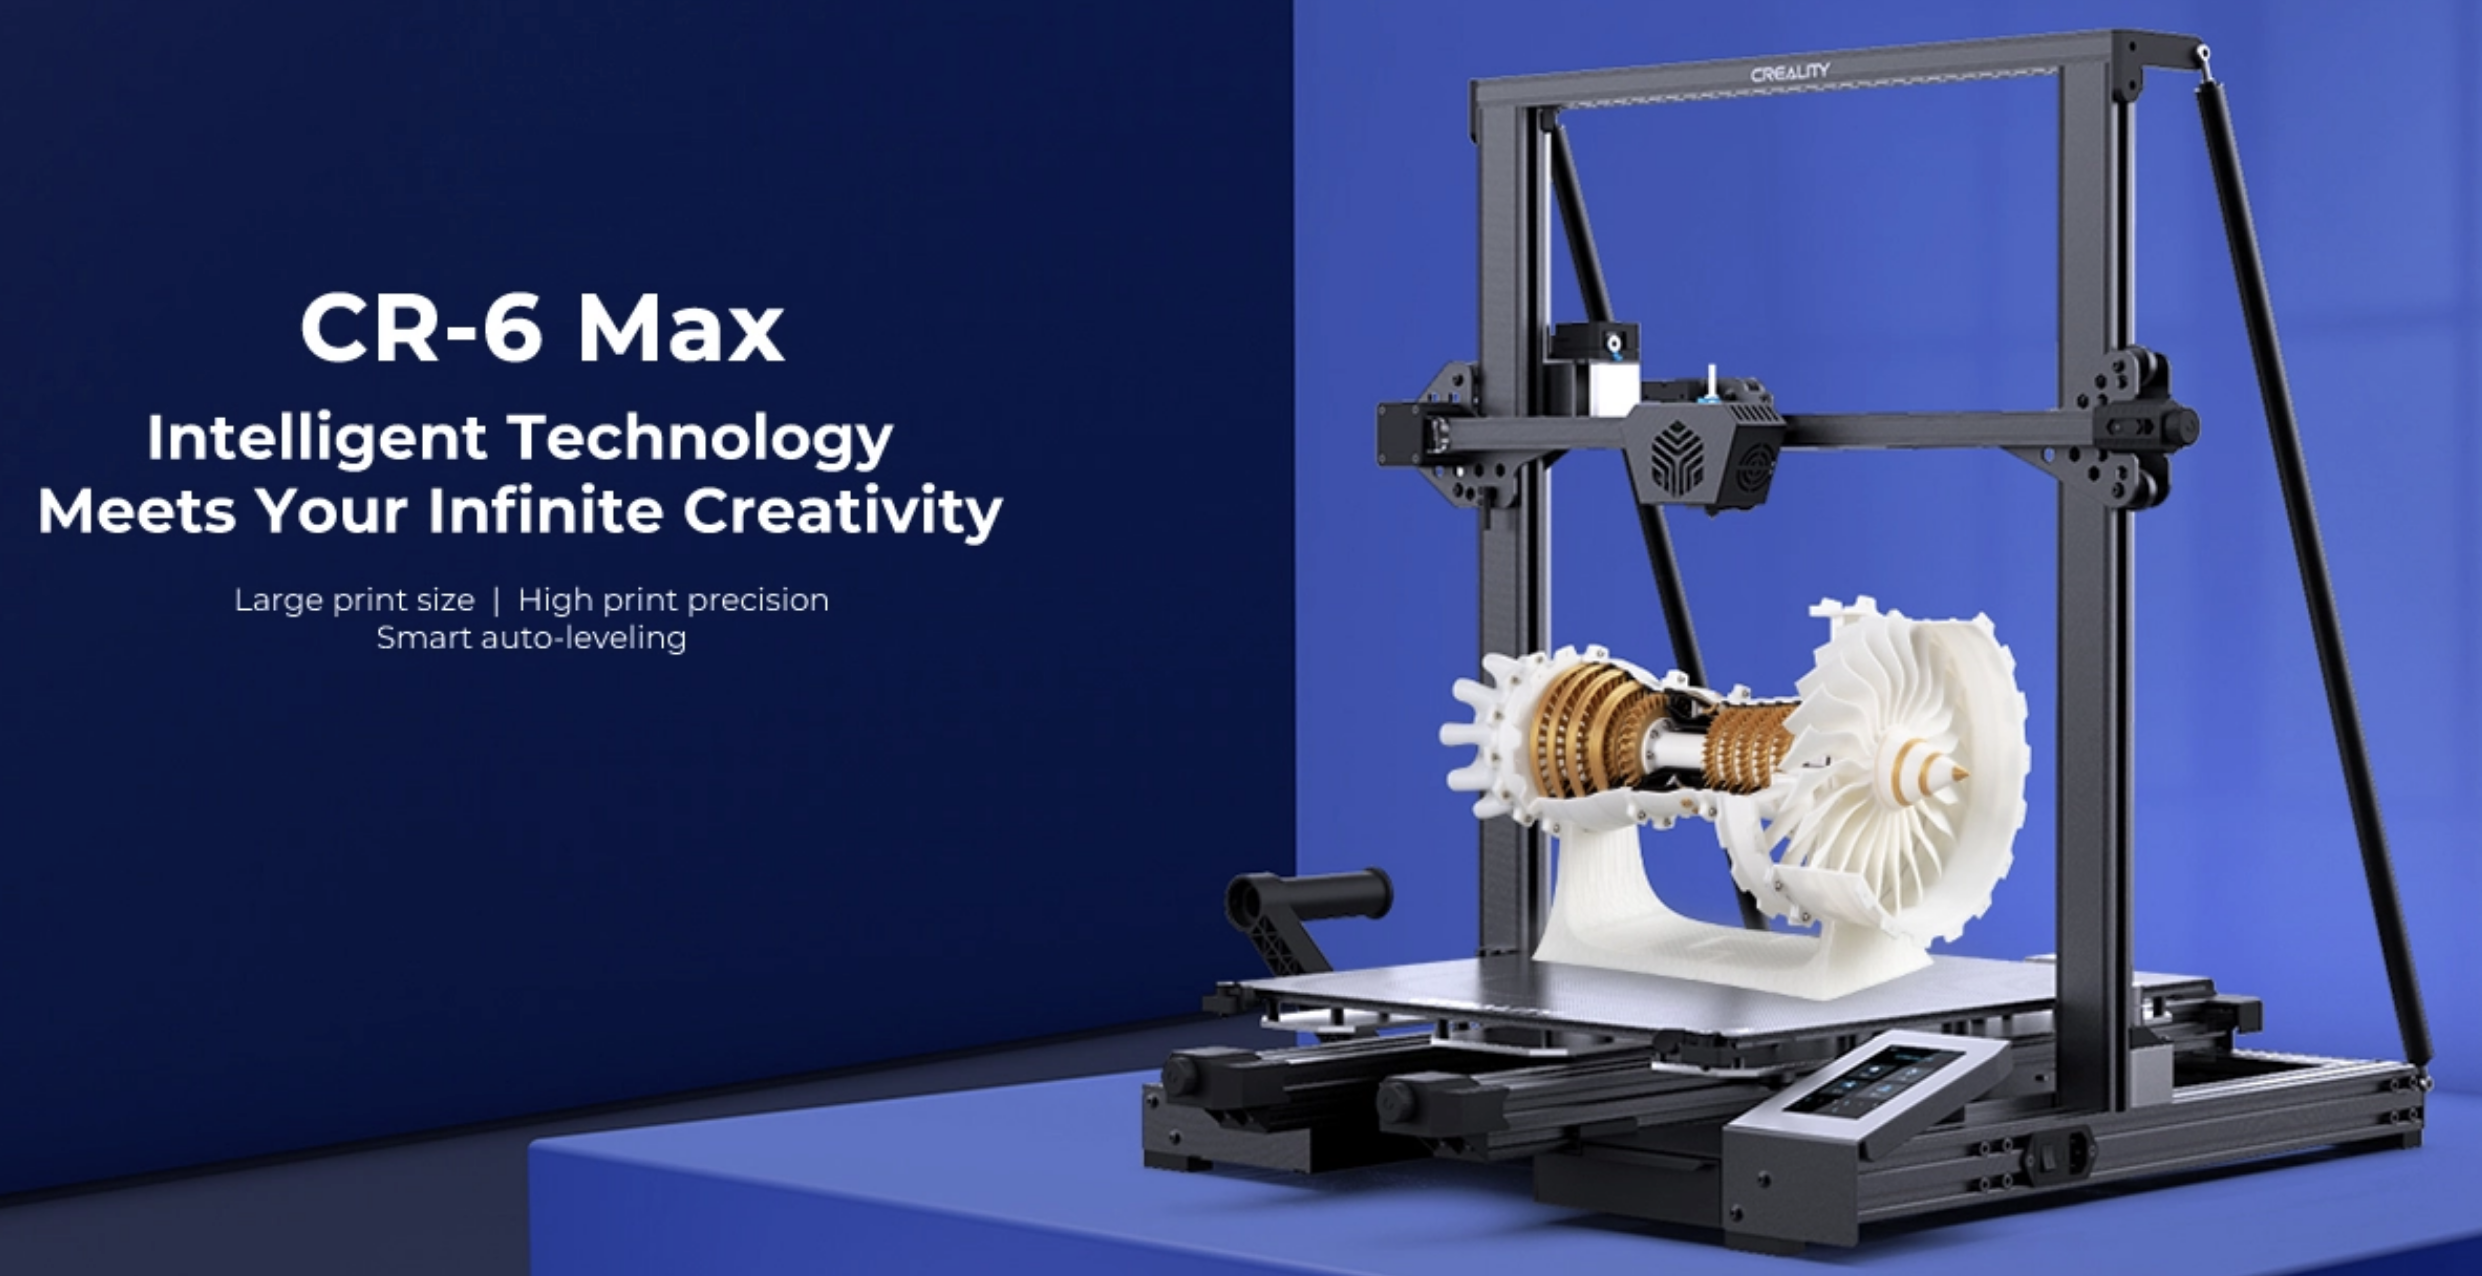 CR-6 MAX 3D printer
CR-6 맥스 3D 프린터
대형 출력사이즈, Double Pull Rod, Dual-Y 축